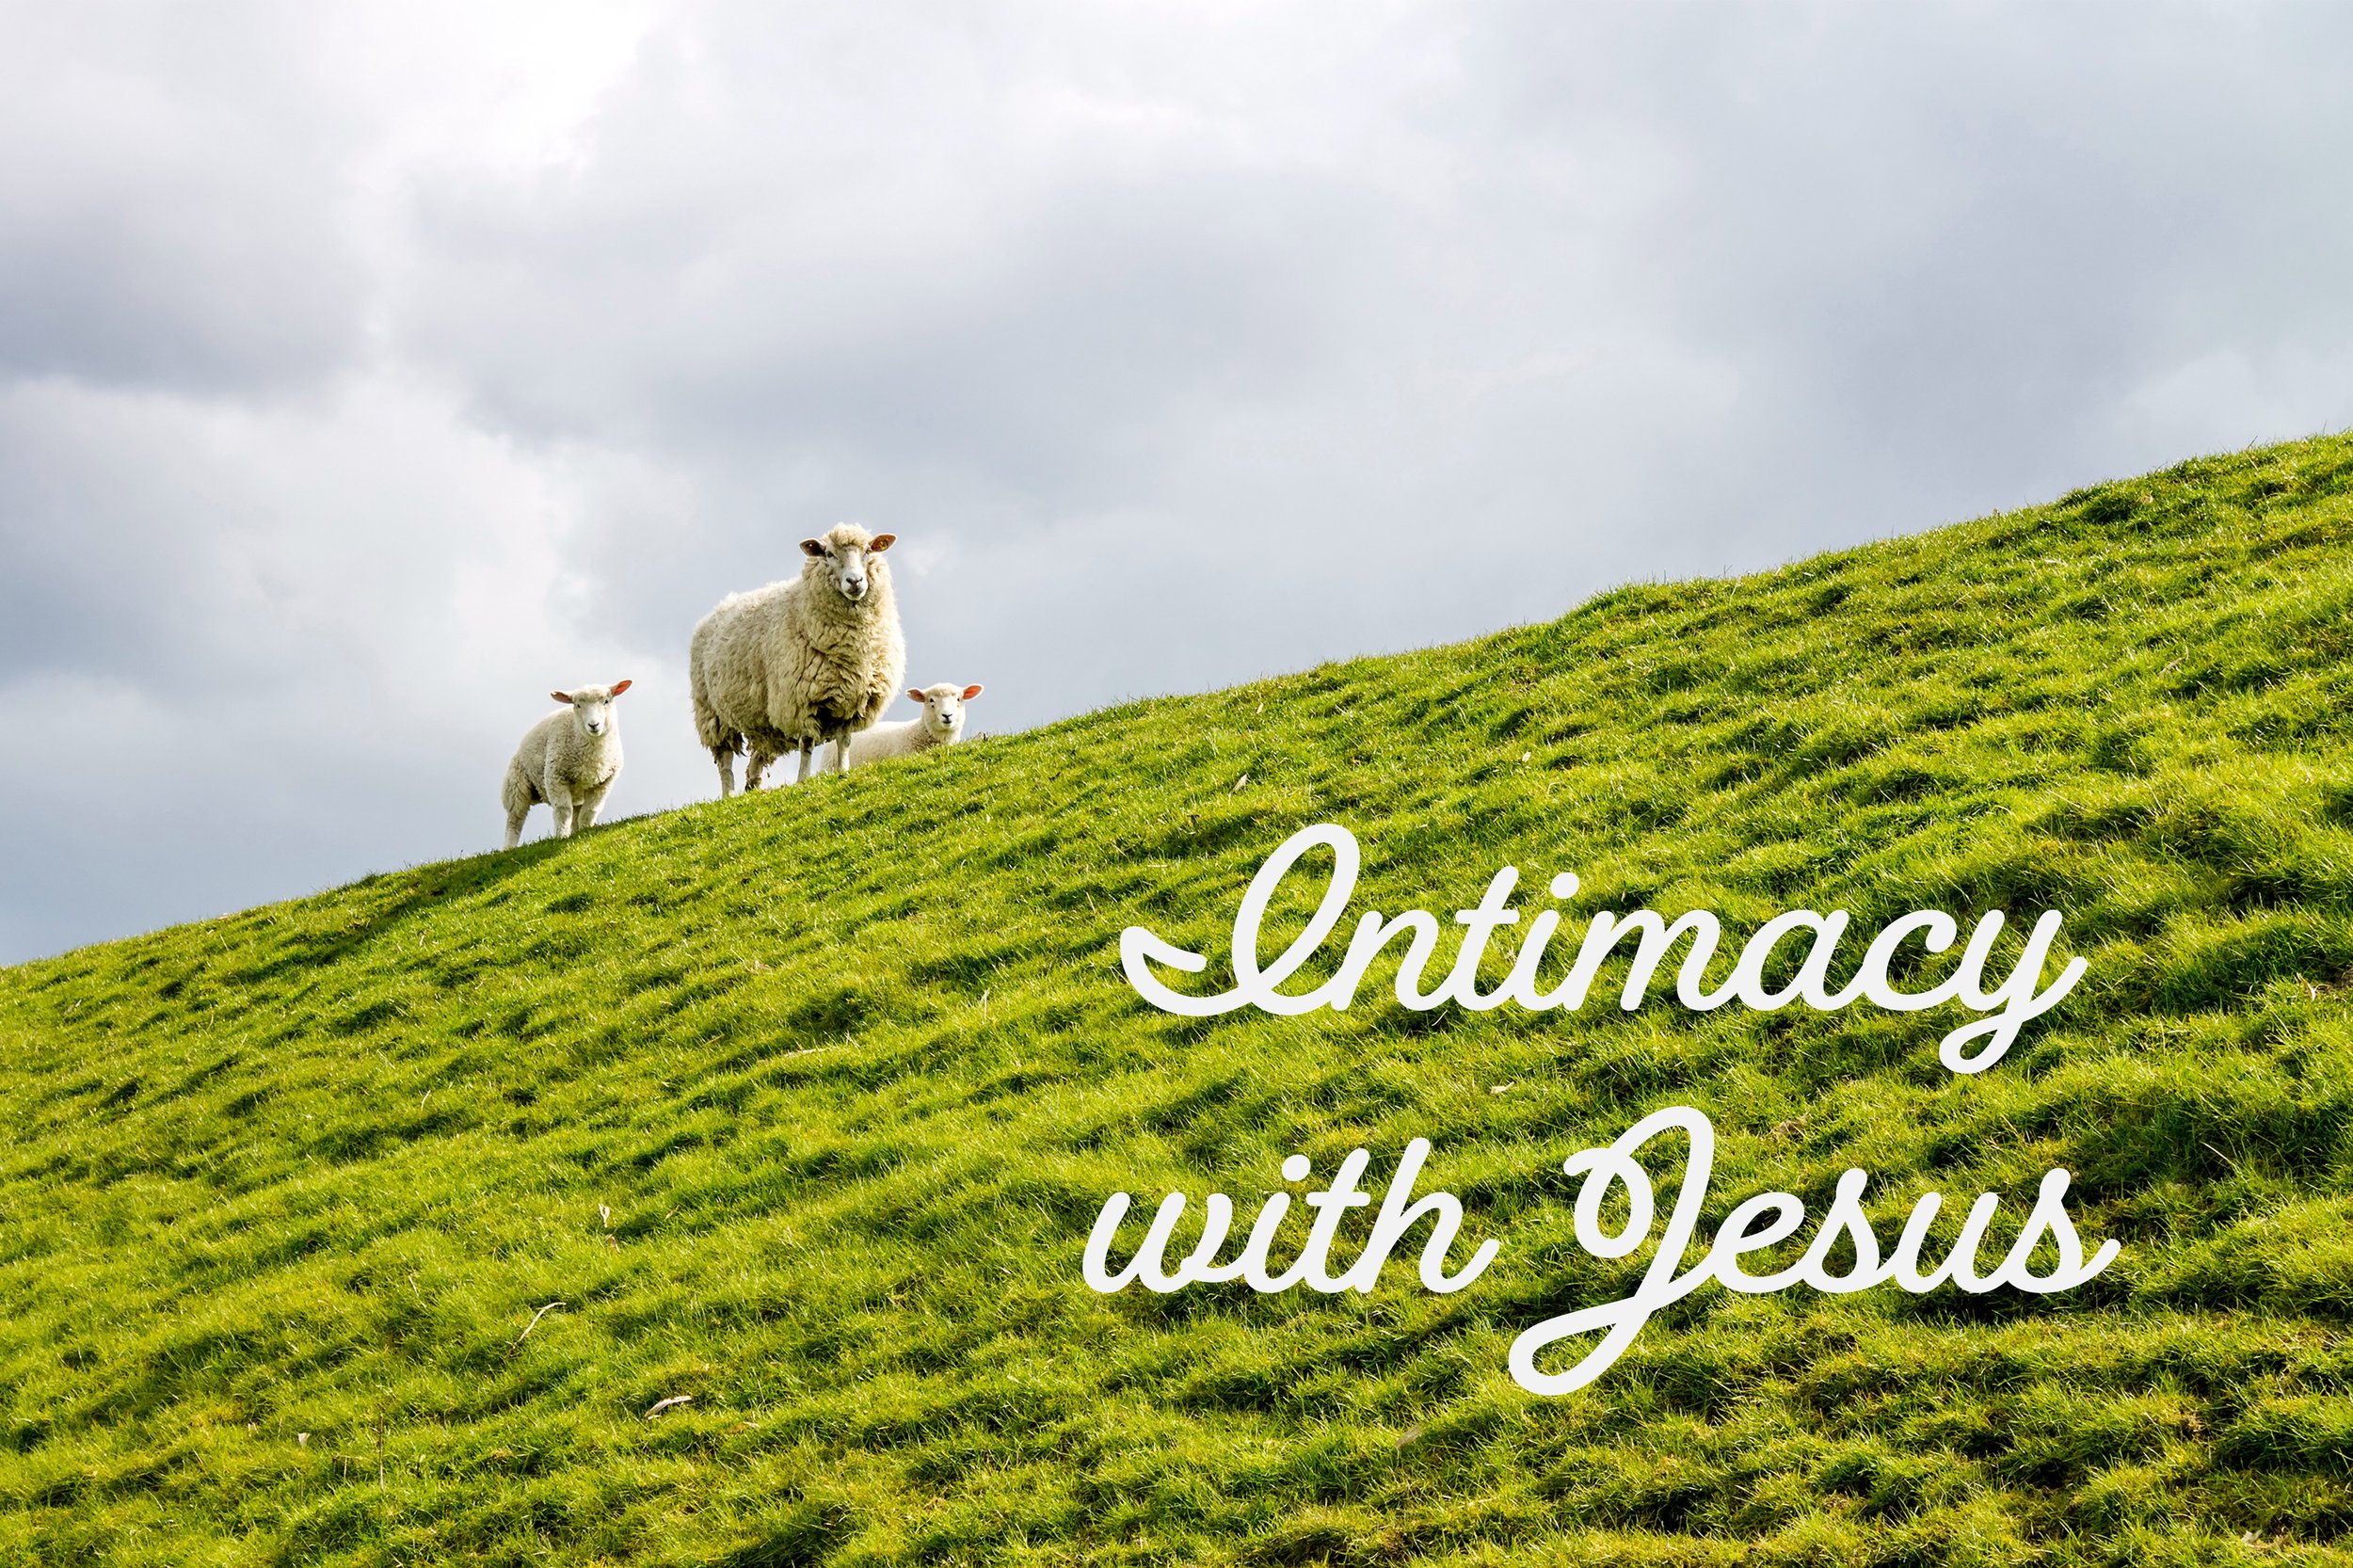 Intimacy With Jesus